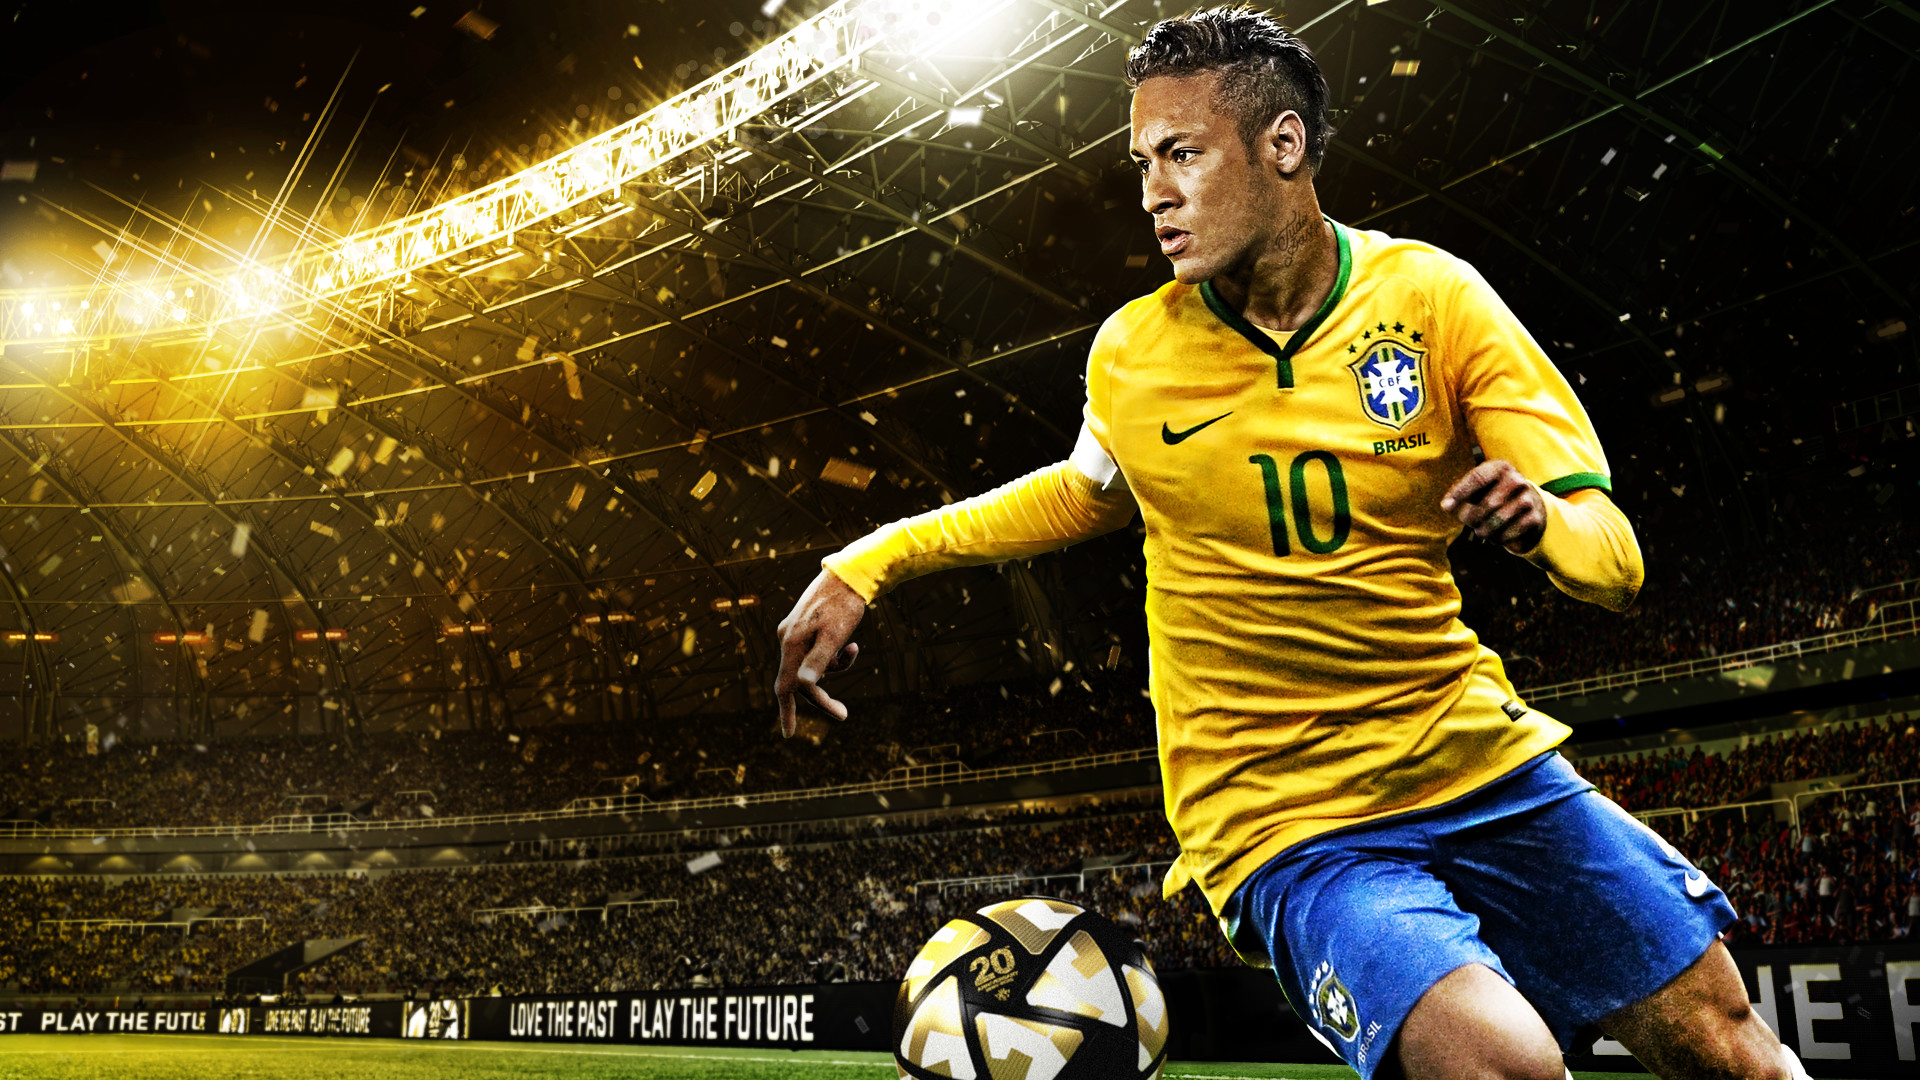 neymar hd壁紙ダウンロード,プレーヤー,サッカー選手,サッカー選手,フットボール,サッカー